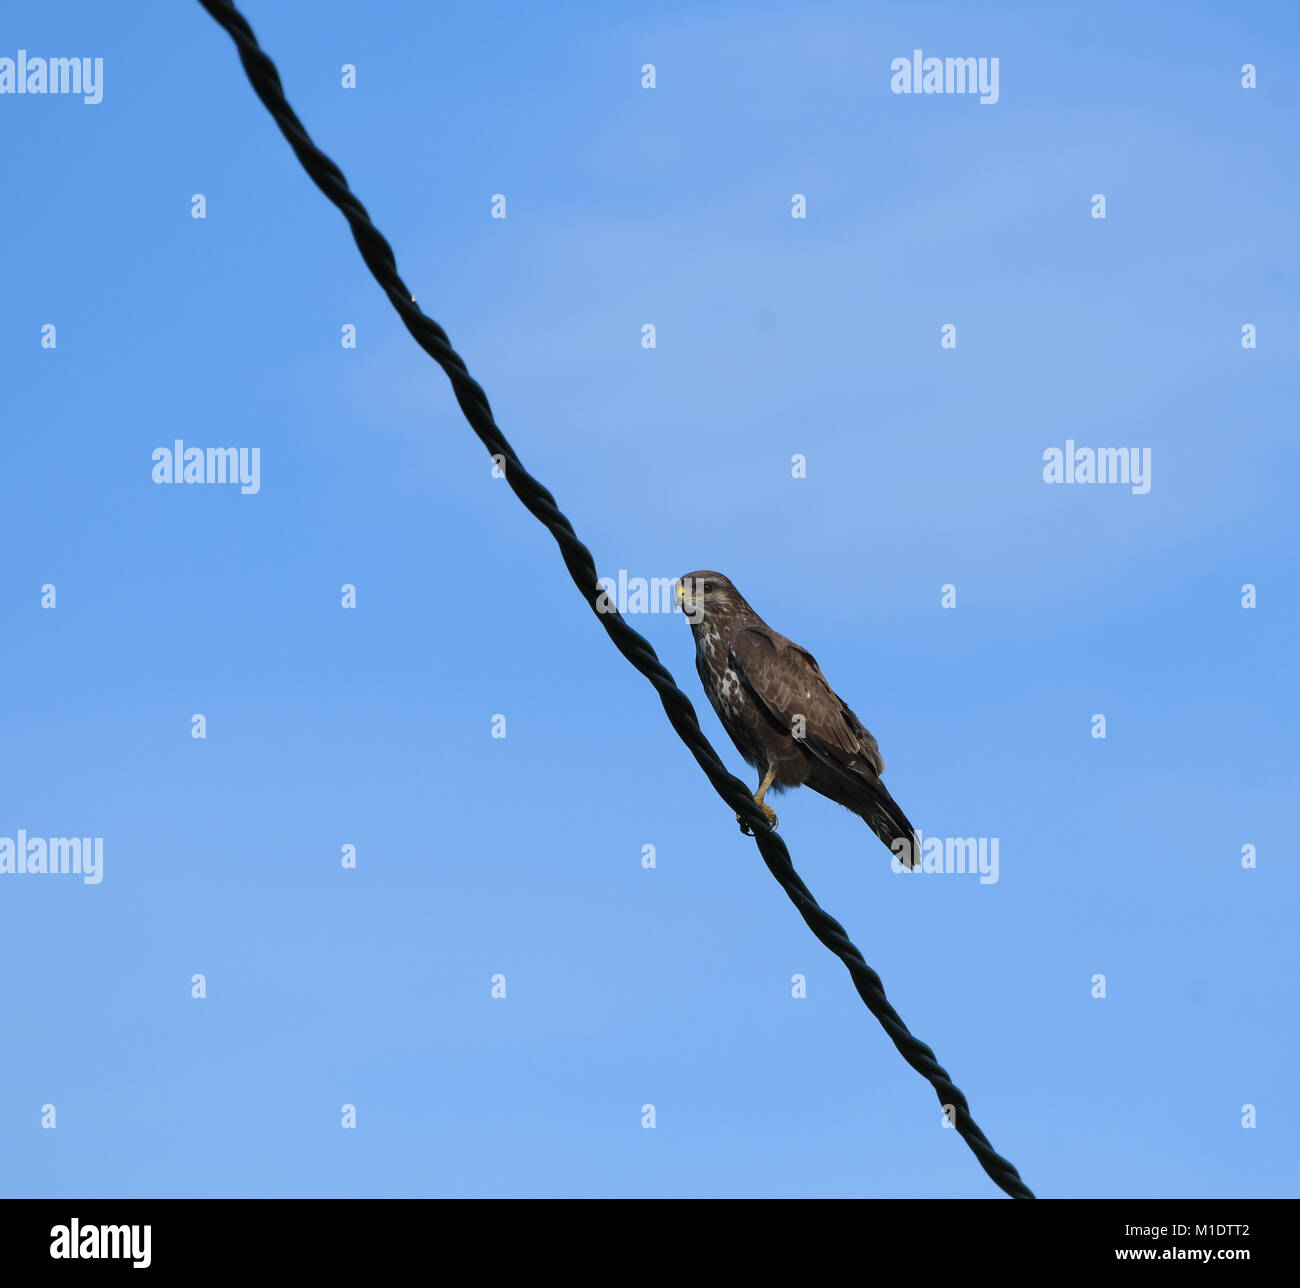 common buzzard perched on a wire Stock Photo